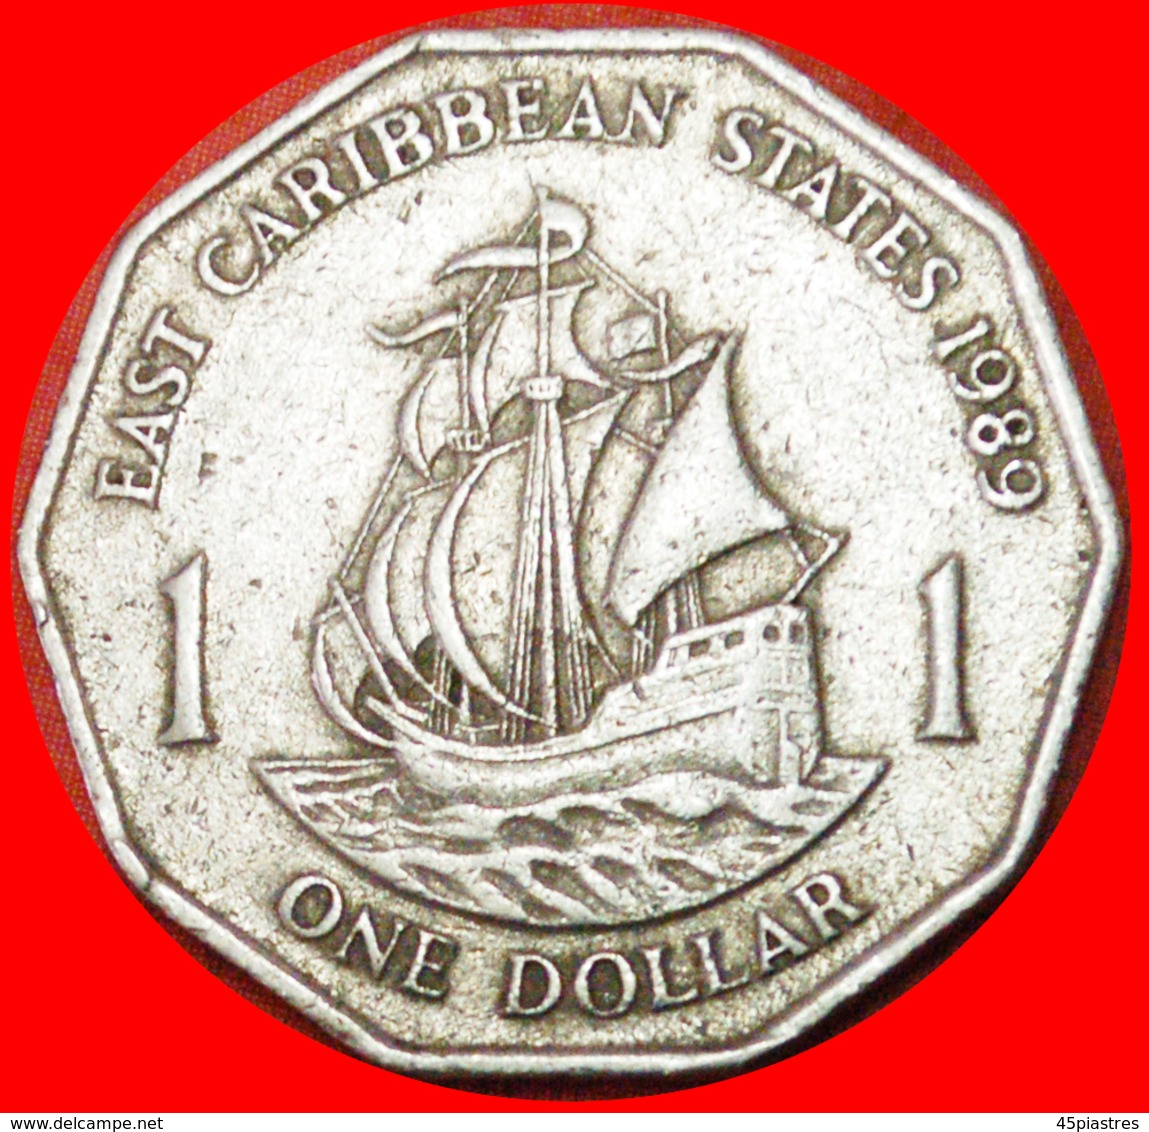 # SHIP Of Sir Francis Drake (1542-1596): EAST CARIBBEAN STATES ★ 1 DOLLAR 1989! LOW START ★ NO RESERVE! - Caraïbes Orientales (Etats Des)